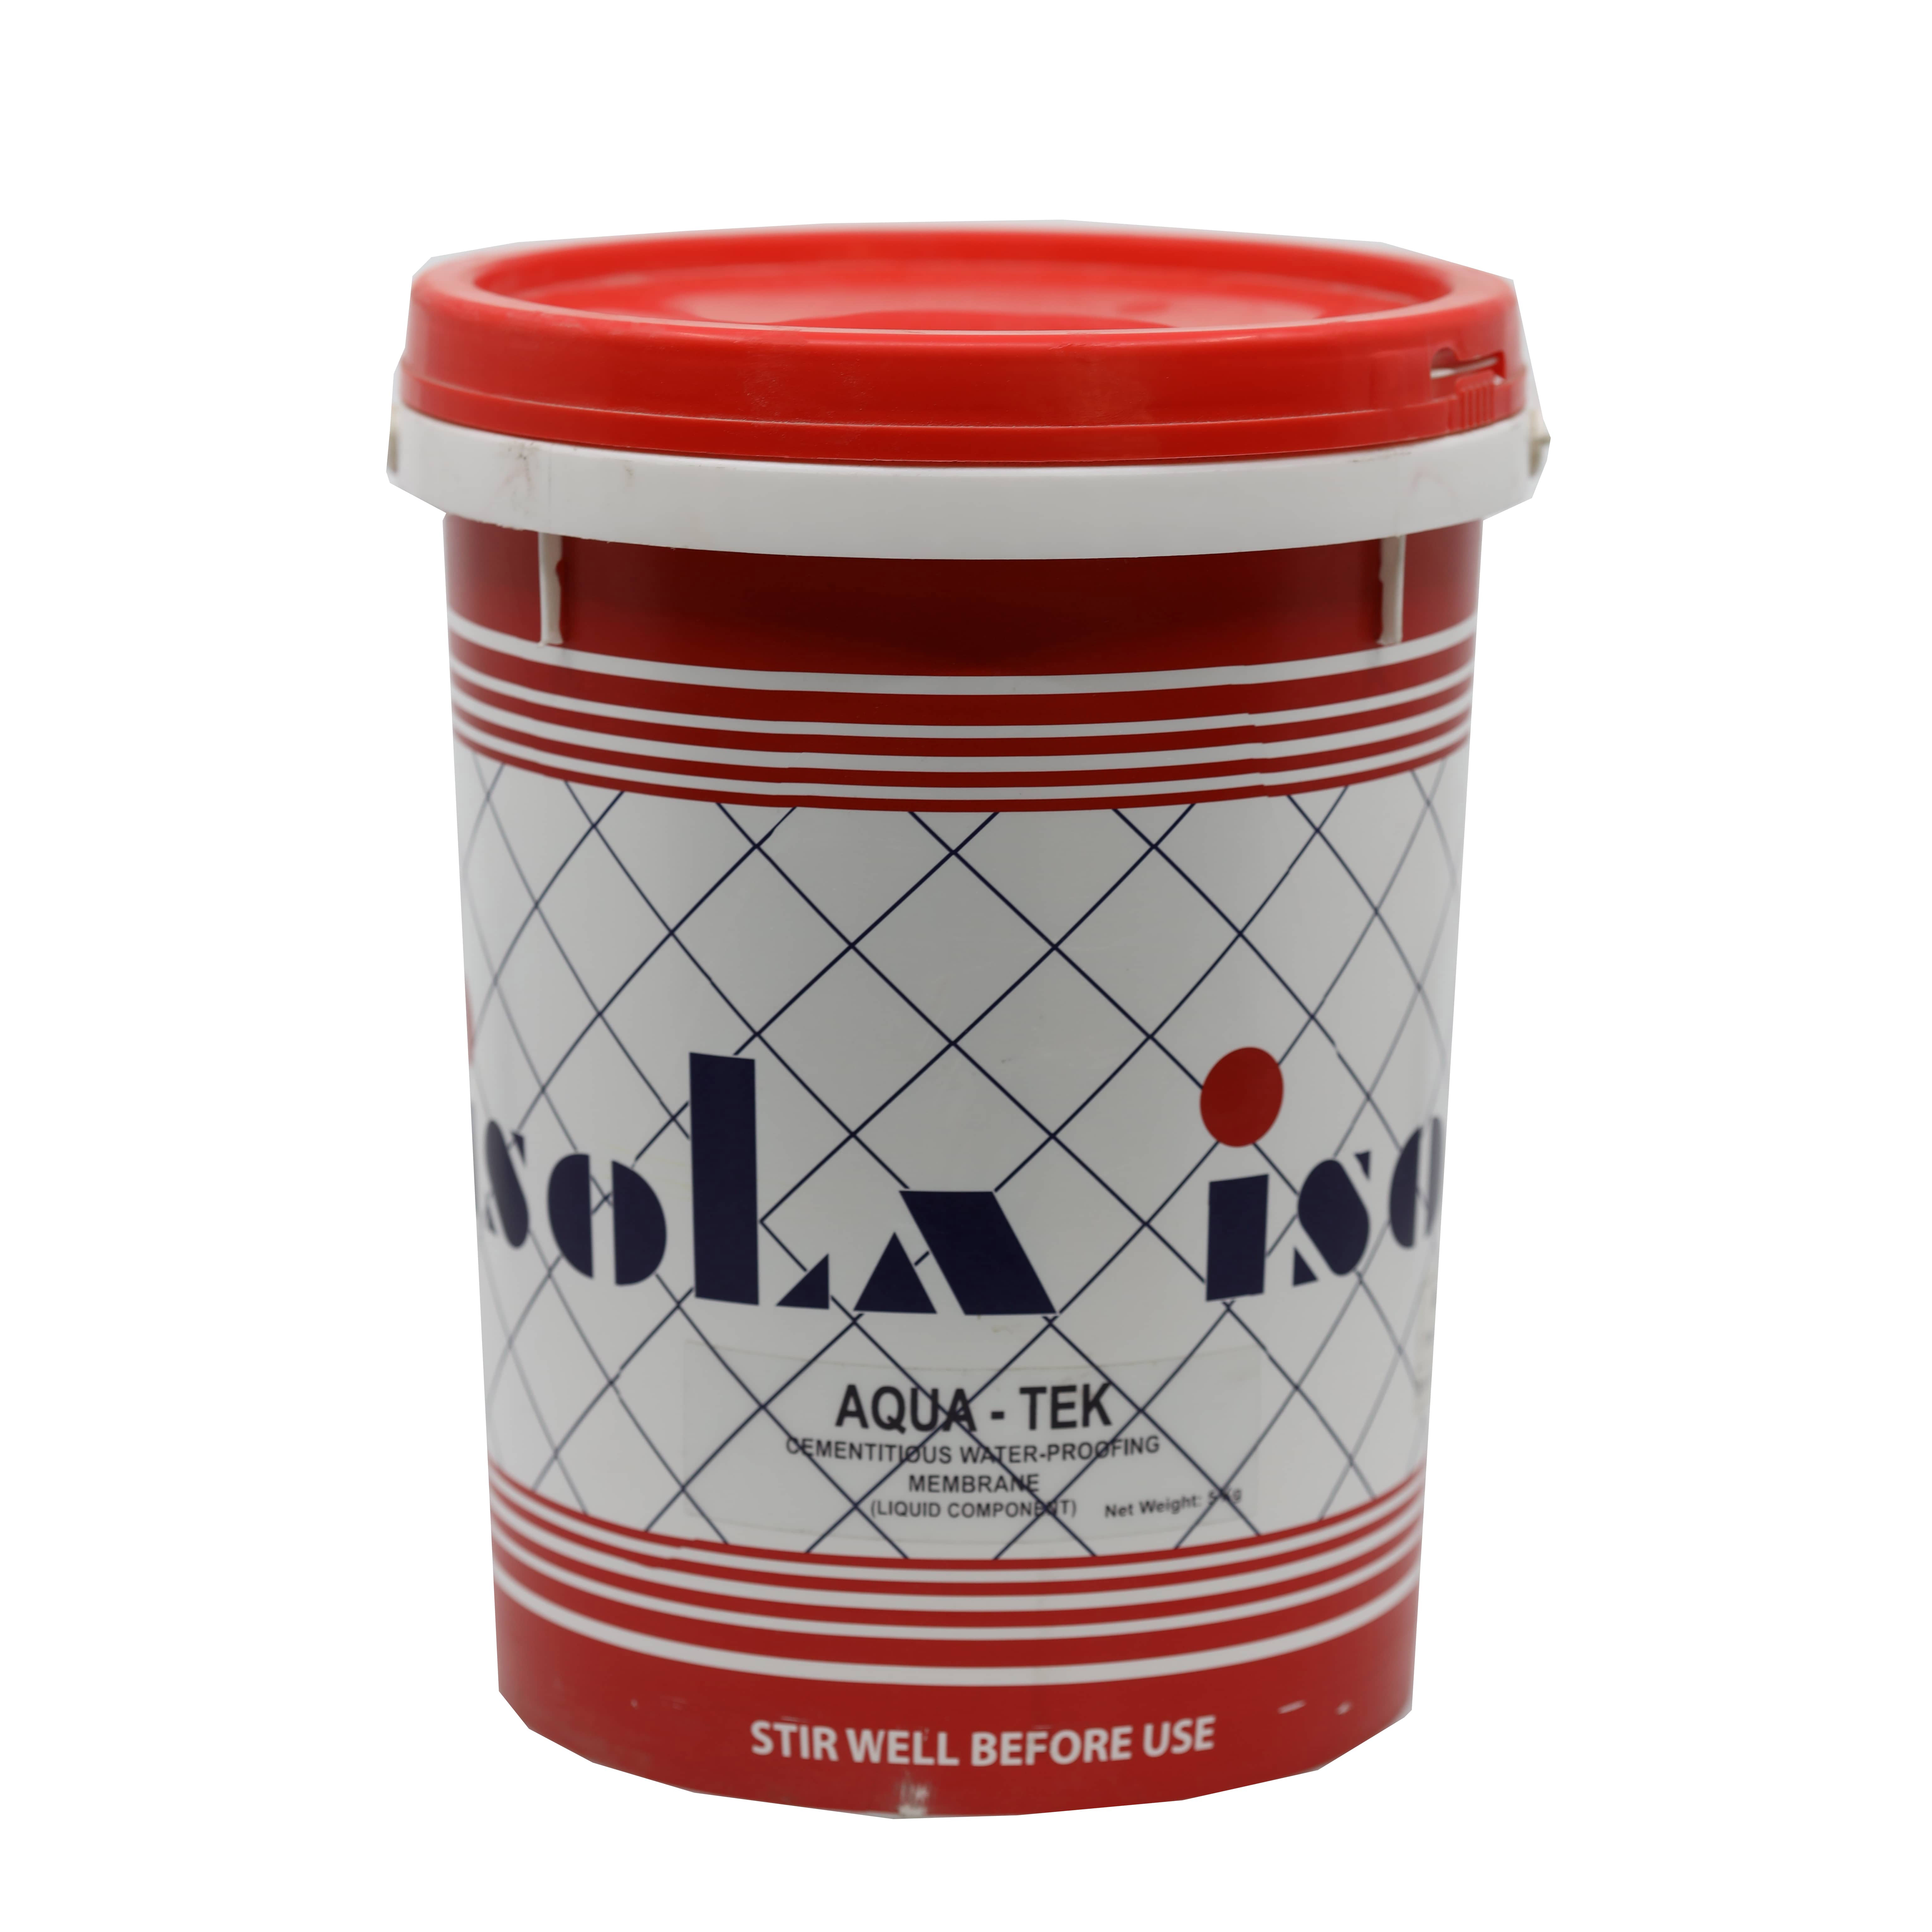 Buy Isola - Aqua-Tek online on Qetaat.com